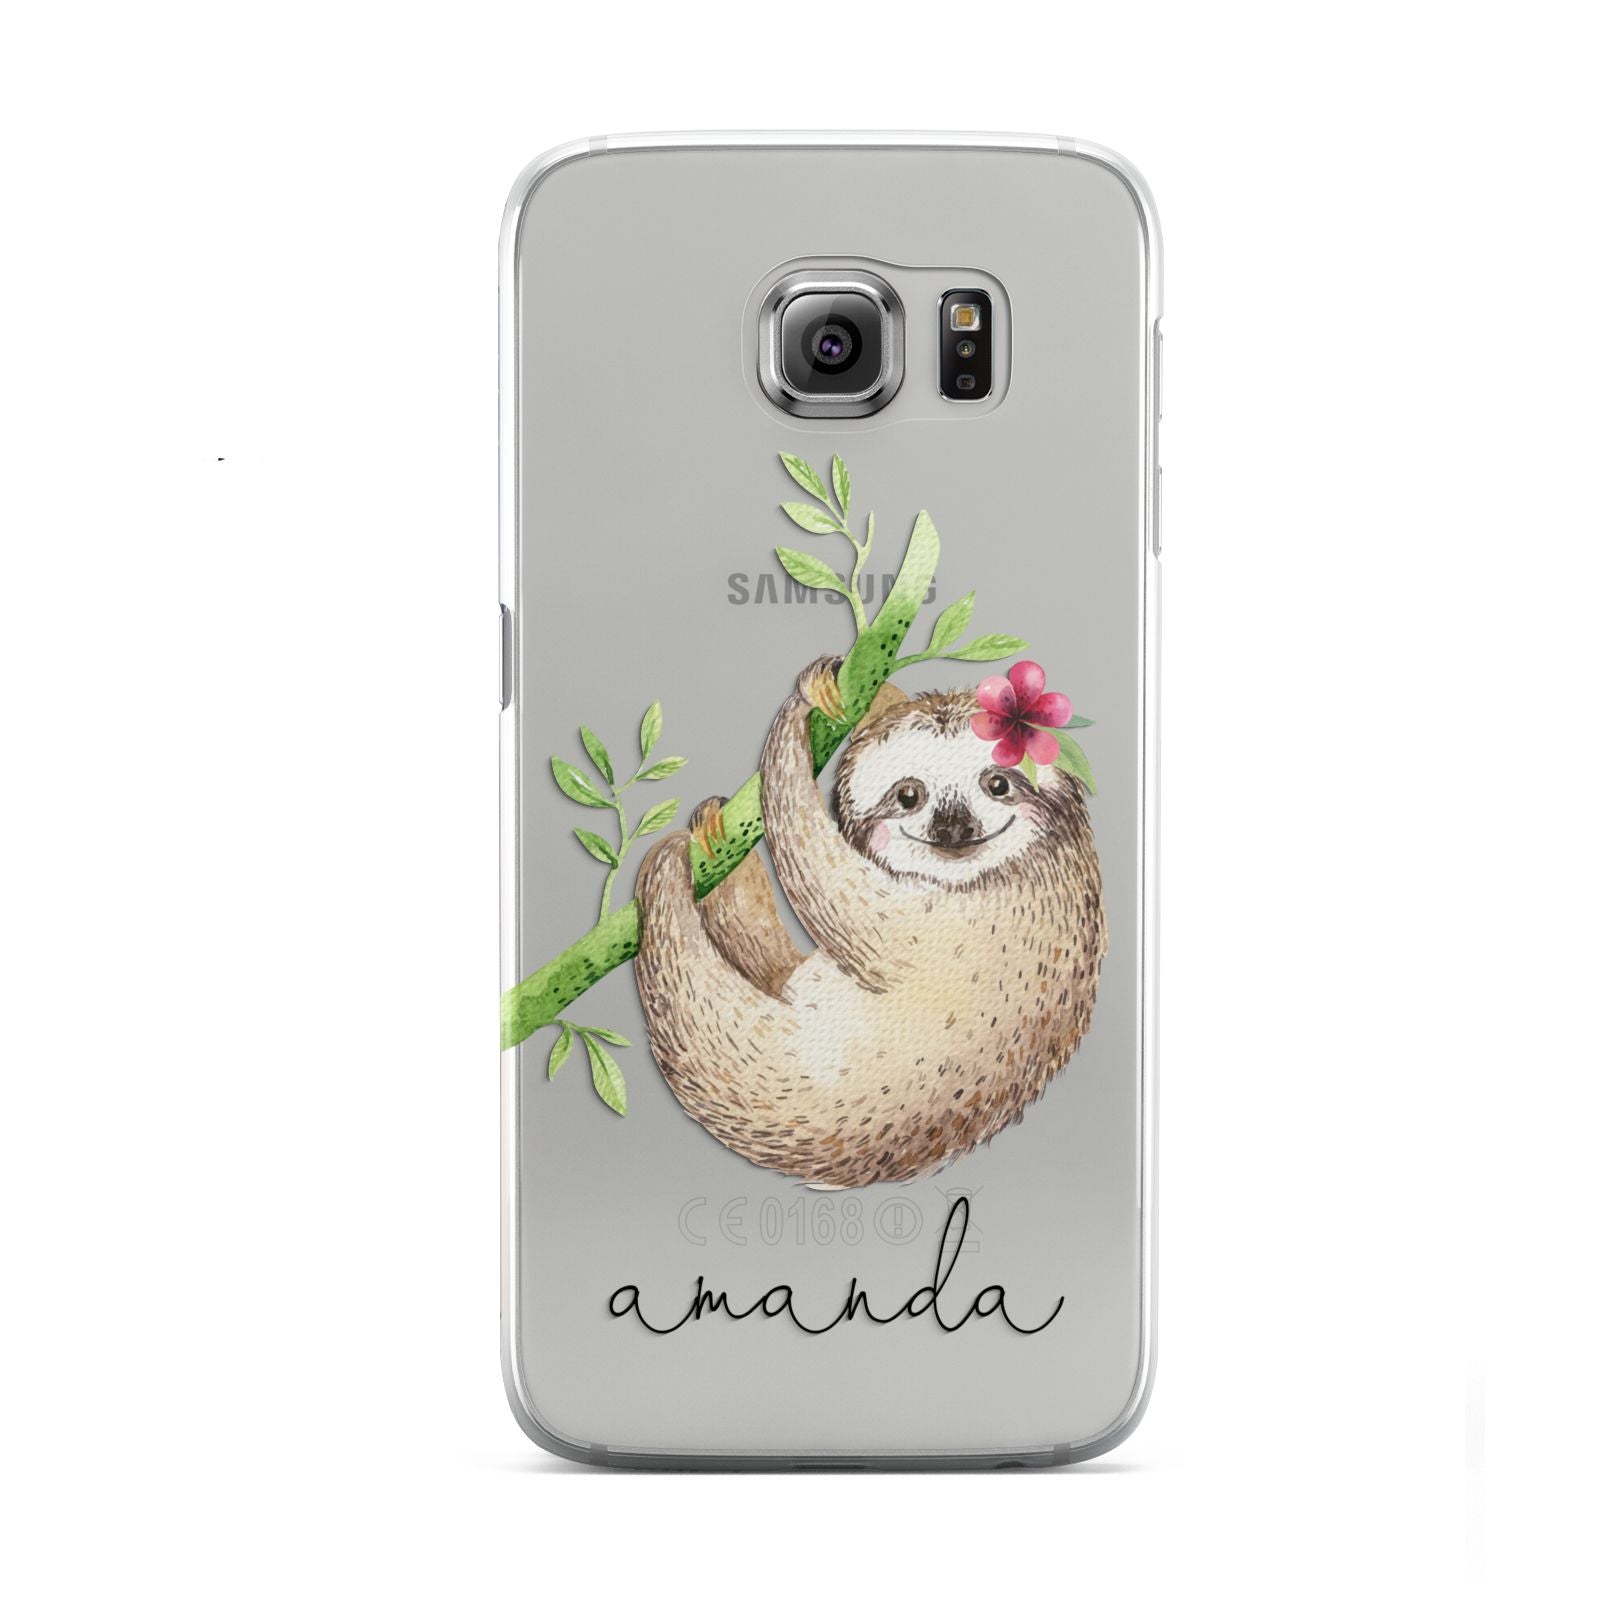 Personalised Sloth Samsung Galaxy S6 Case